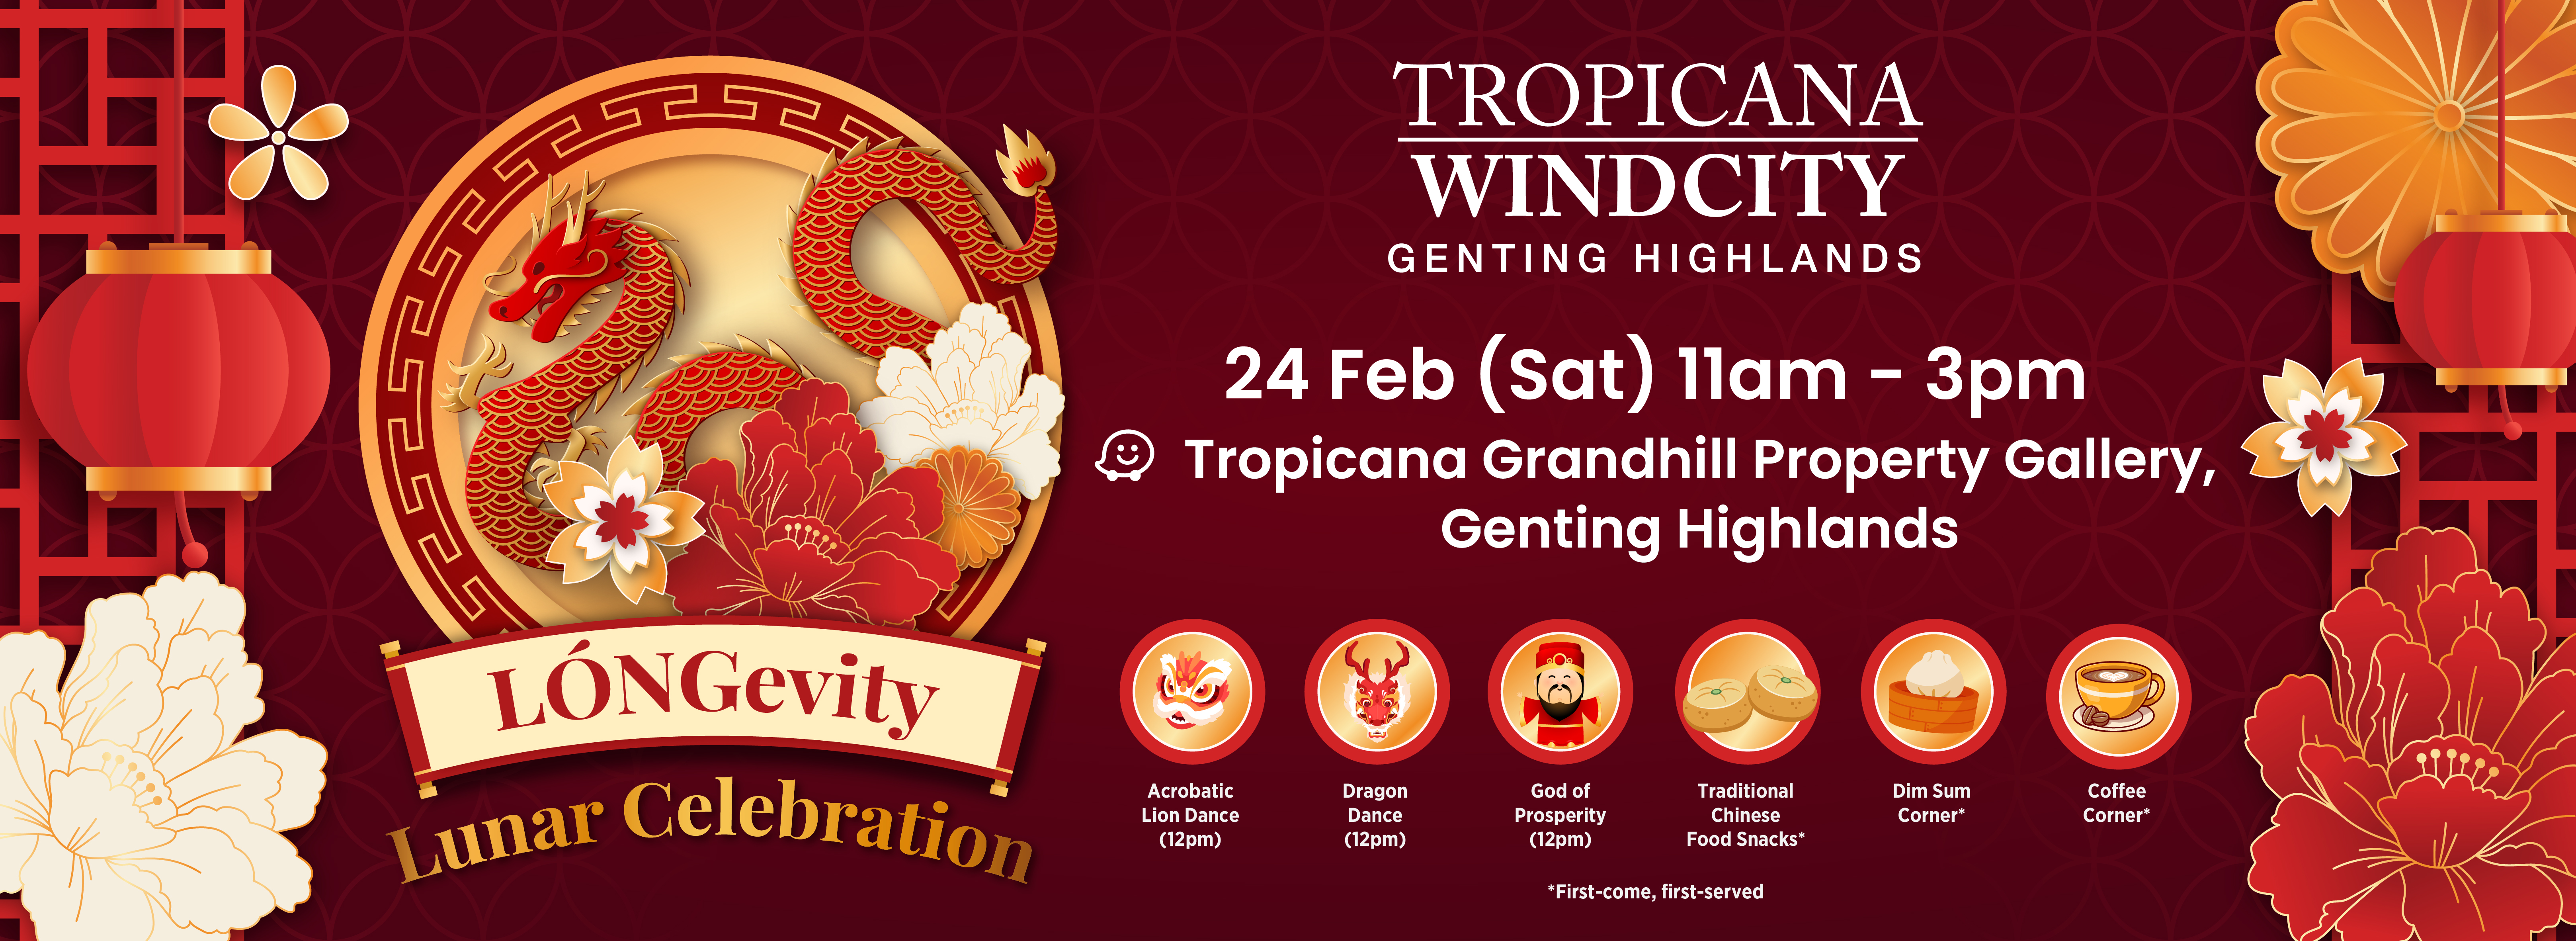 Tropicana Windcity New Promotion